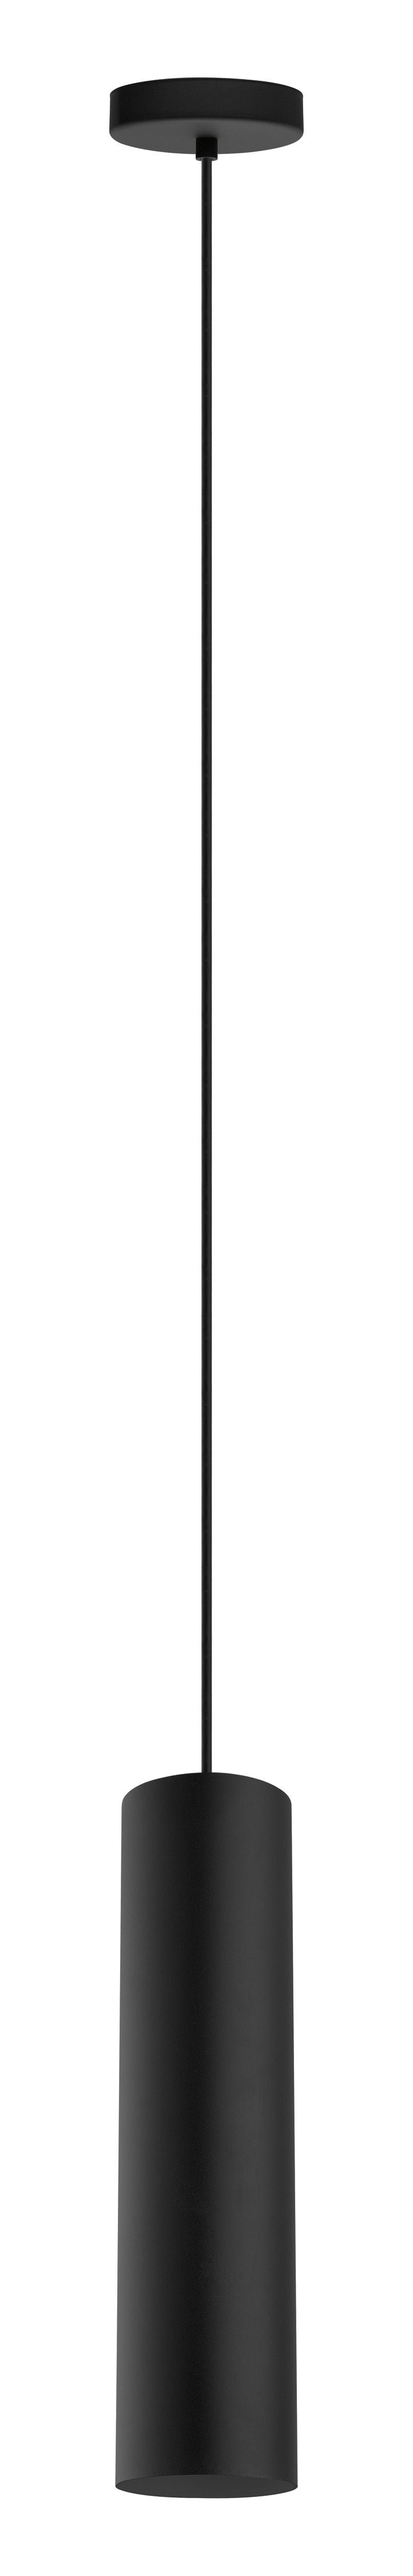 Tortoreto Suspension simple Noir - 62557A | EGLO